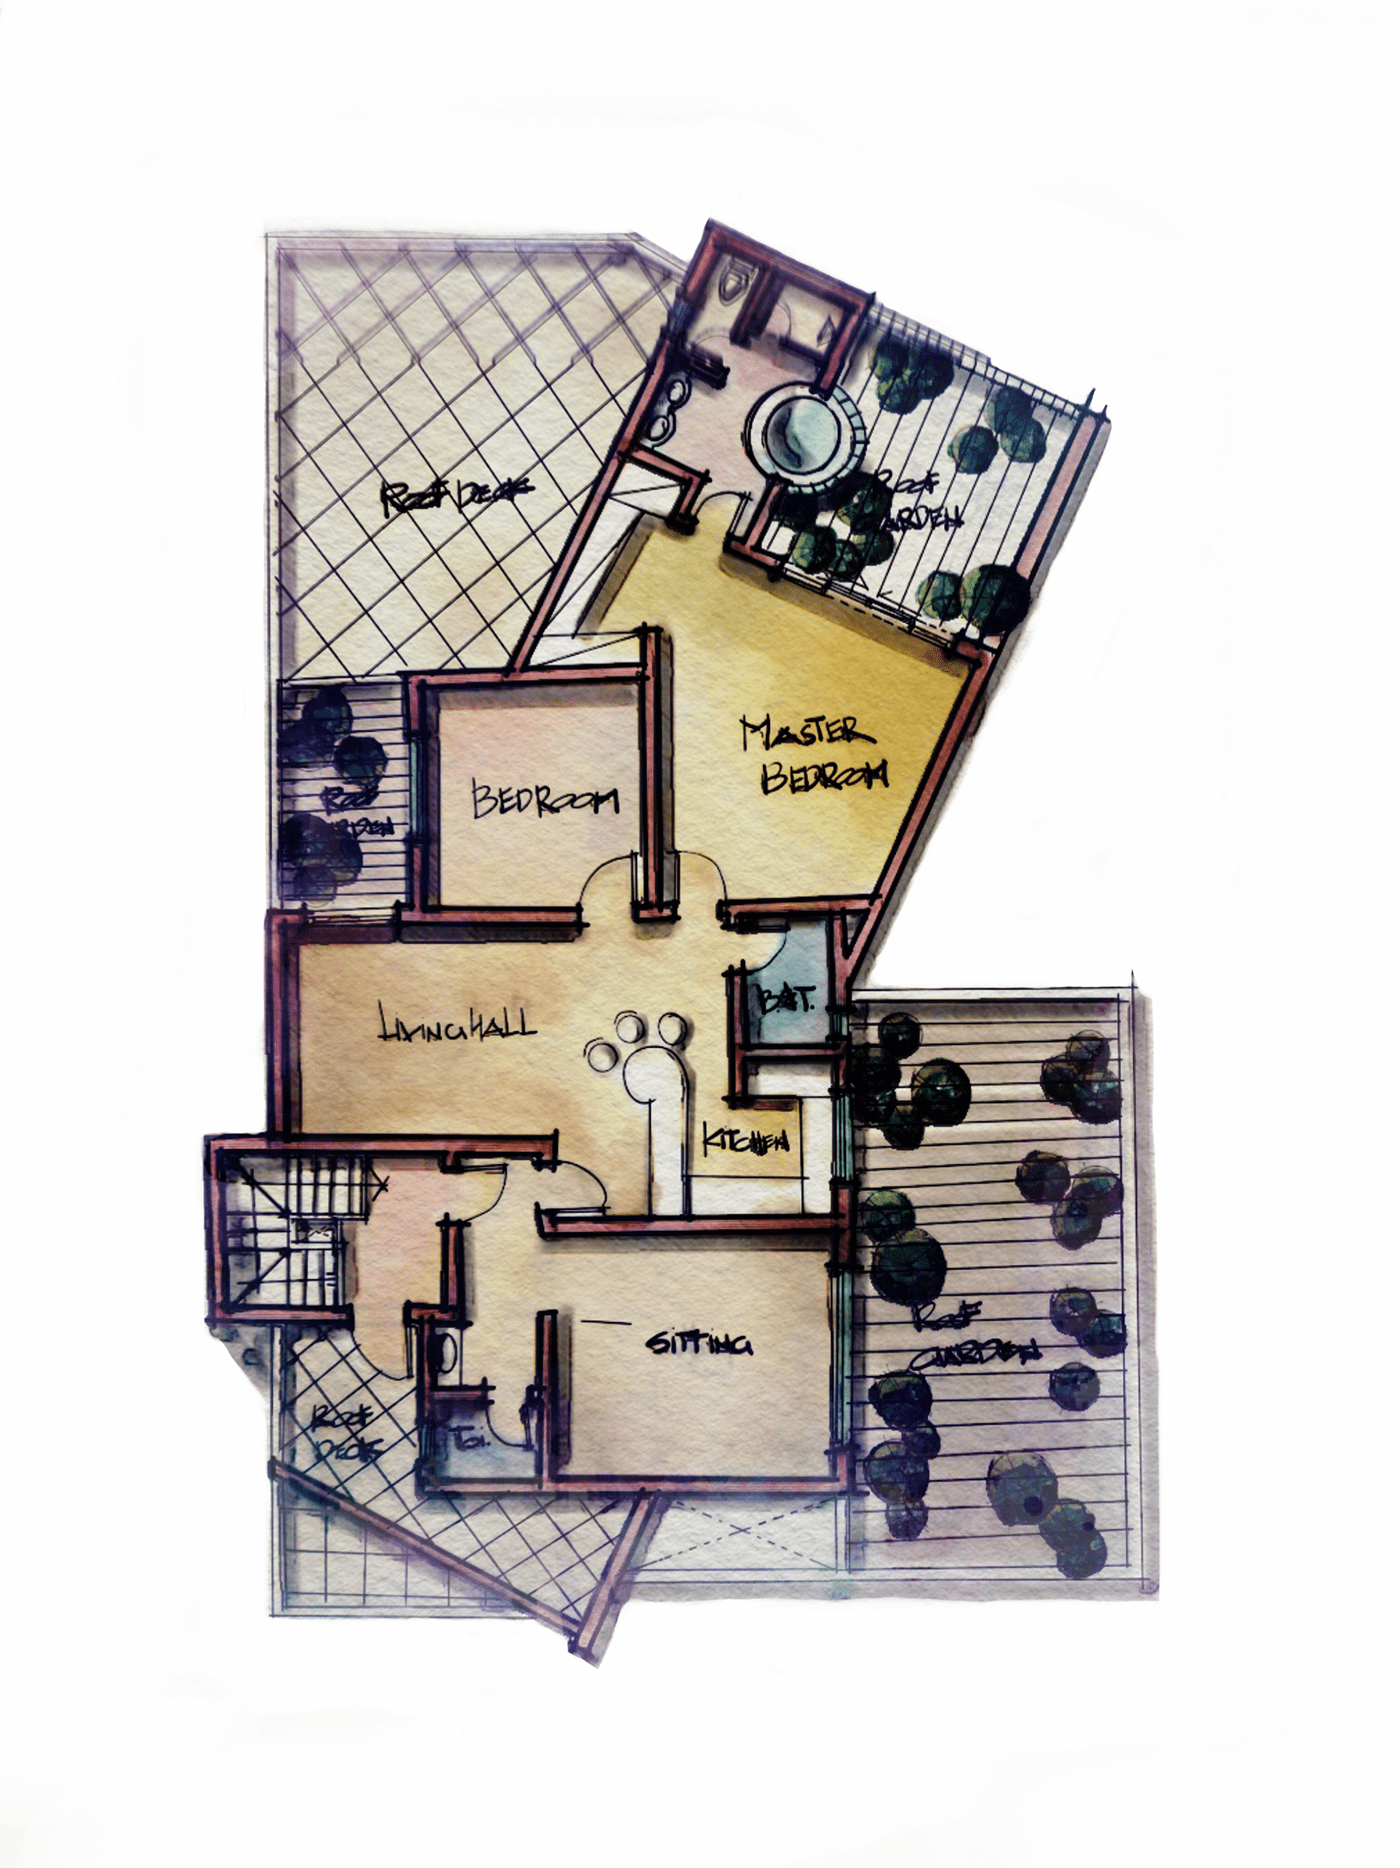 digital home modern Residence sketch Villa architectural architecture building Plan plans